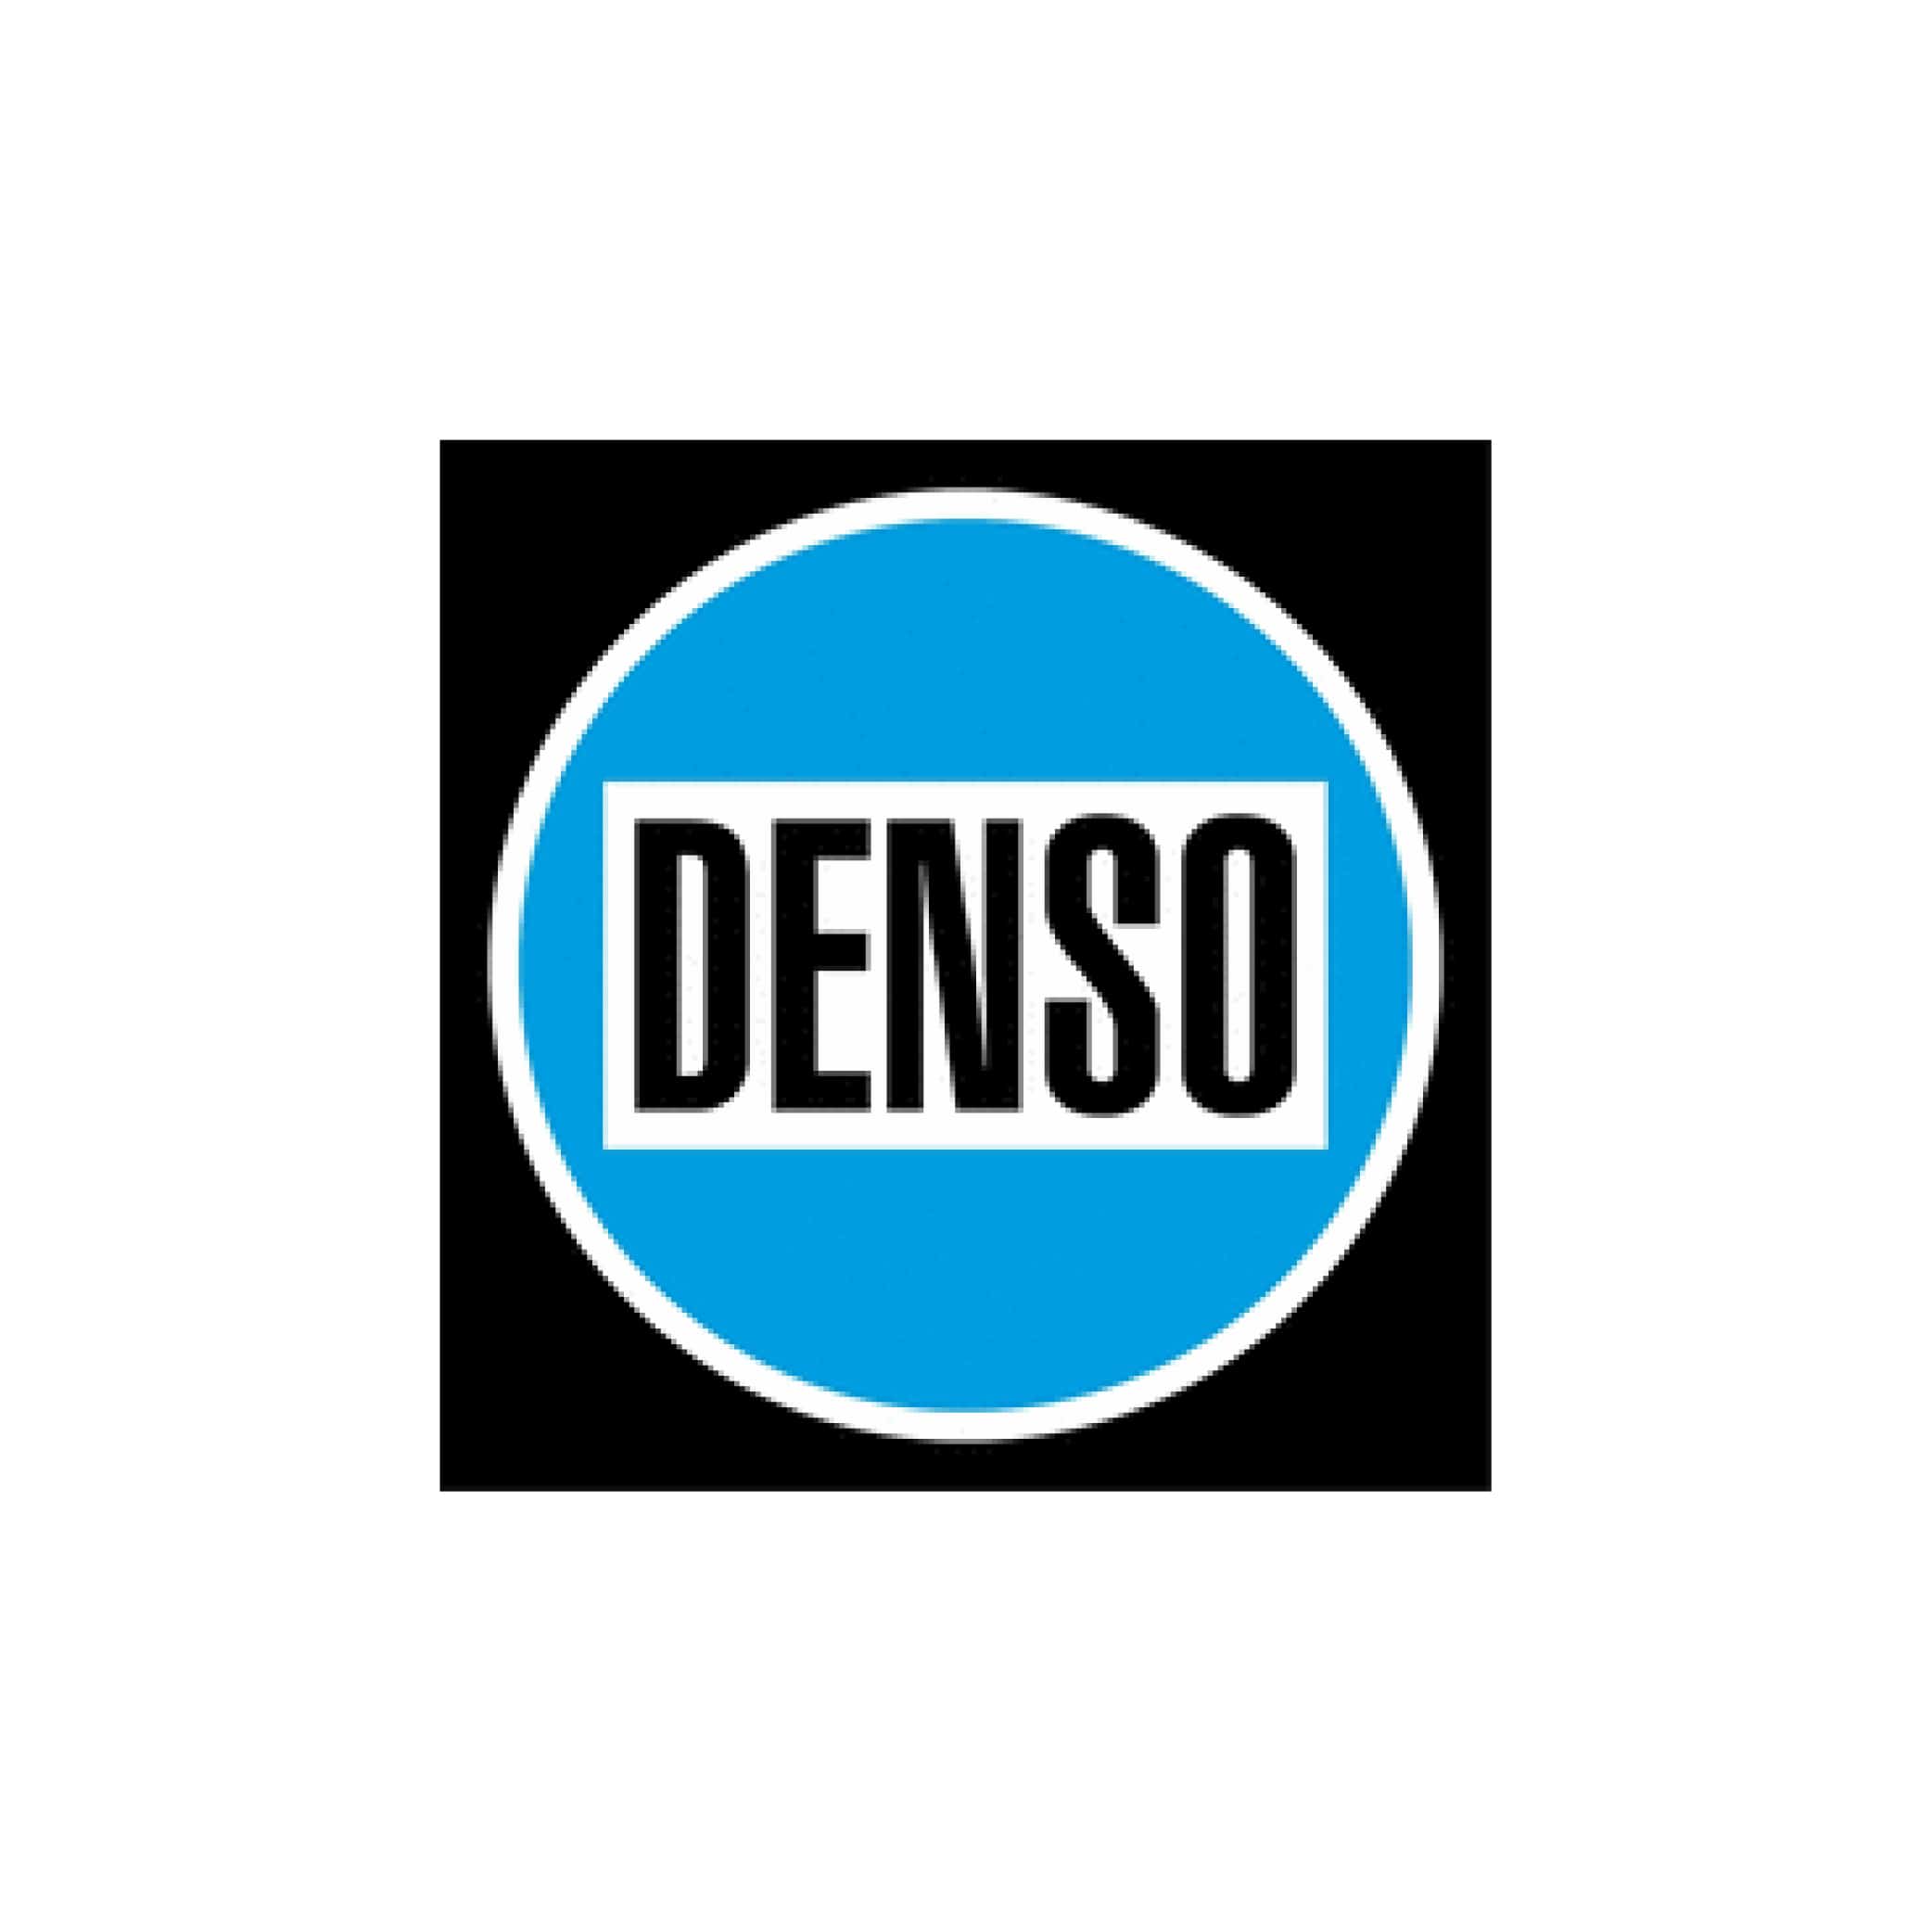 Denso Group